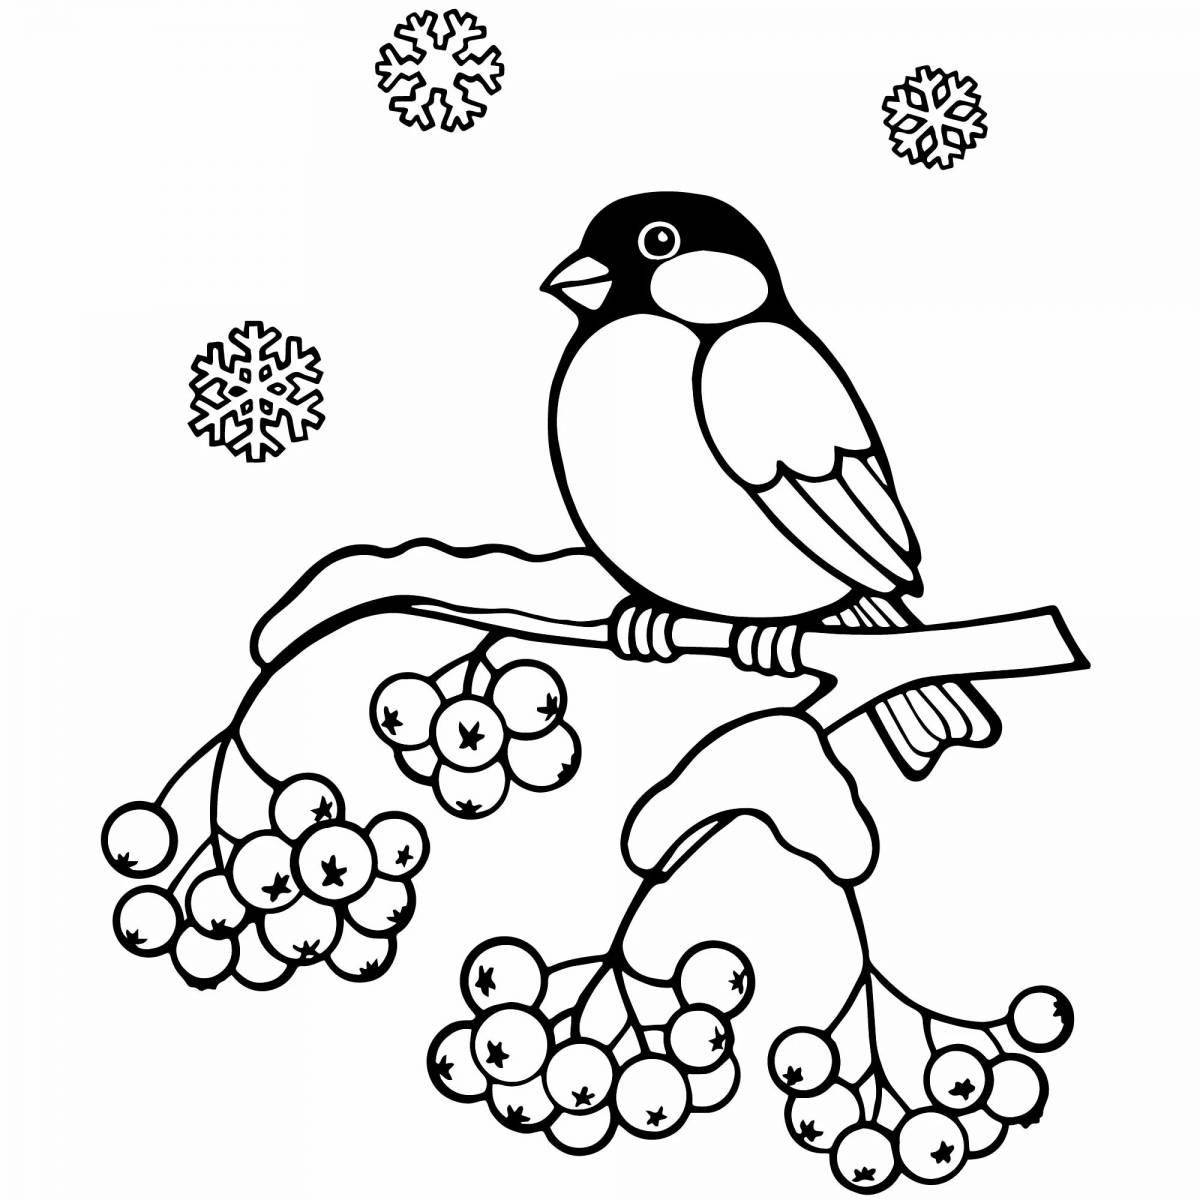 Exquisite winter bird coloring book